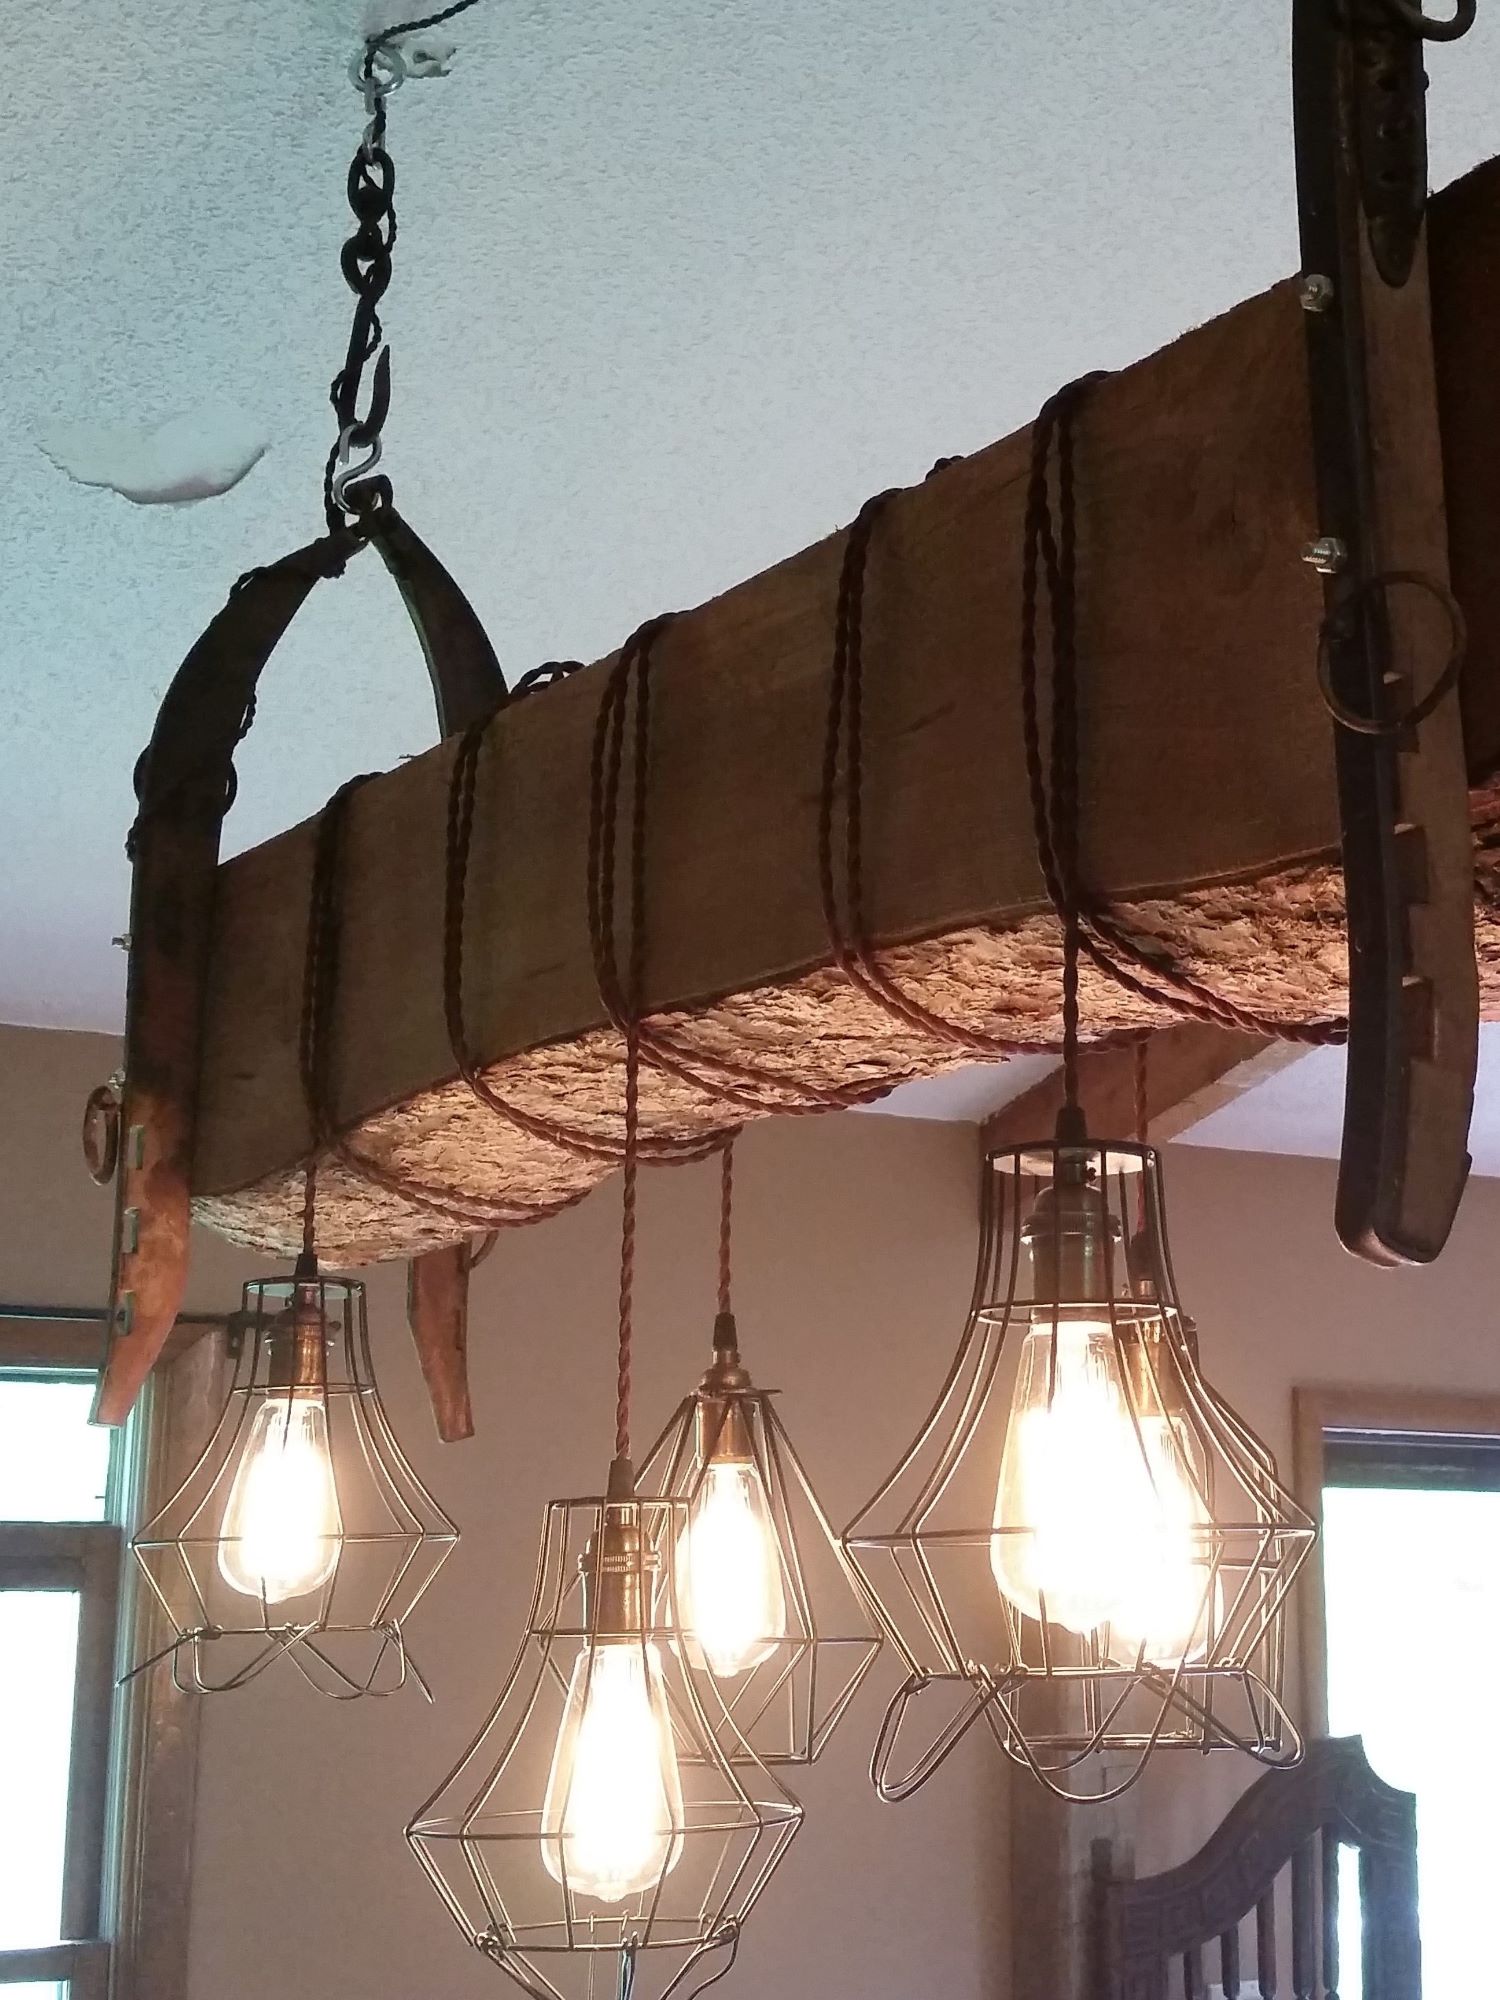 Custom lighting installation made by a customer